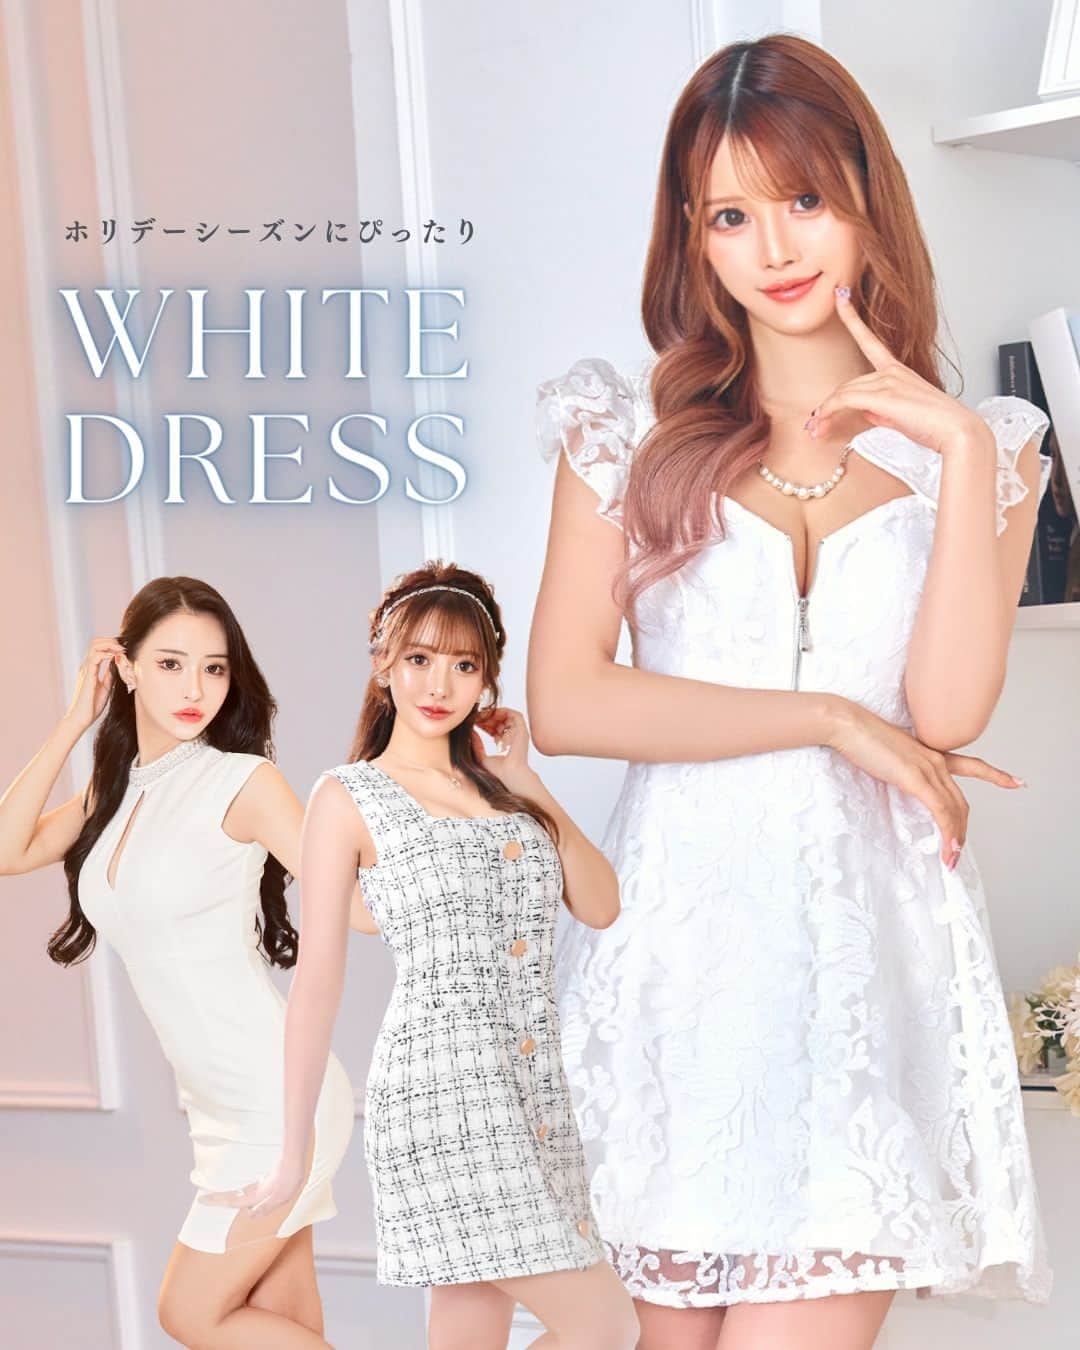 DazzyStoreさんのインスタグラム写真 - (DazzyStoreInstagram)「クリスマスはどれ着たい？⁠ ⁠ ホリデーシーズンは⁠ ホワイトドレスの気分🤍🤍🤍⁠ ⁠ ･･････････････････････････････････⁠ #桜咲乃愛 さん着用 @noasama1101⁠ 🏷ジャガードフロントジップネックレスAラインミニドレス⁠ Price：¥7,678 (tax in)⁠ Size：S / M / L⁠ Color：ROSE / WHITE ⁠ 商品No.🔍 : am86296⁠ ⁠ ジャガード生地がラグジュアリーなミニドレス。⁠ 人気のフロントジップに胸元チャームでセクシーに♥⁠ 体型カバーできるAラインスカートで女性らしく♪⁠ フリル袖で華奢見え効果も抜群な一着✨⁠ ･･････････････････････････････････⁠ #みな さん @minann22⁠ 🏷フロントラインフラワーチュールレースAラインミニドレス⁠ Price：¥7,678 (tax in)⁠ Size：S / M / L⁠ Color：ROSE / WHITE ⁠ 商品No.🔍 : am86293⁠ ⁠ フラワー刺繍のチュールレースが上品なミニドレス。⁠ 付属のリボンブローチとパールボタンが高級感をプラス✨⁠ ふんわりＡラインシルエットで体型カバー。⁠ どこかイノセントな雰囲気を纏う一着💗⁠ ･･････････････････････････････････⁠ #まりさ さん @m_rs._.616⁠ 🏷パールビジューオフショルボックスプリーツAラインミニドレス⁠ Price：¥19,800 (tax in)⁠ Size：S / M ⁠ Color：WHITE⁠ 商品No.🔍 : 1m60132⁠ ⁠ パールビジューのストラップがついたオフショルドレス。⁠ ボックスプリーツのＡラインシルエットがキュート❤⁠ 凸凹のある生地が高級感を演出。⁠ パールボタンとジグザグストレッチがアクセントに✨⁠ ･･････････････････････････････････⁠ #carua さん @caru__gram⁠ 🏷スクエアネックツイードボタンAラインミニドレス⁠ Price：¥6,578 (tax in)⁠ Size：S / M / L⁠ Color：WHITE / BLACK⁠ 商品No.🔍 : am70215⁠ ⁠ チェックツイードにAラインの上品ミニドレス。⁠ フロントの大きめボタンがアクセント♪⁠ スクエアネックのノースリーブで⁠ ヘルシーな肌見せを叶えます💕⁠ ･･････････････････････････････････⁠ #まおちゃる さん @_maocharu_⁠ 🏷パールビジューネック谷間ホールサイドシアータイトミニドレス⁠ Price：¥9,328 (tax in)⁠ Size：S / M ⁠ Color：WHITE / BLACK⁠ 商品No.🔍 : am45028⁠ ⁠ パールビジューが煌めくネックラインが⁠ 美しいミニドレス。⁠ 上品な谷間ホールで大人の色気をプラス❤⁠ スリット風サイドシアーで美脚見せ抜群♪⁠ ･･････････････････････････････････⁠ ⁠ プロフィールのURLから⁠ オンラインショップをチェックしてね👆⁠ ▽　▽　▽　▽⁠ @dazzy_official⁠ 　⁠ ⁠⁠\\モニターキャンペーン//⁠ ワンカラーパールビジューアメスリマーメイドミニドレス⁠ がもらえる⁠モニター企画を開催中♡⁠ ⁠ 詳しくは12月5日の投稿をチェック👆⁠ 　⁠ ⁠／⁠ ⁠ dazzyドレスの着用写真を　⁠ ⁠#dazzyme をつけて投稿すると⁠ dazzy公式HPで紹介されるかも･･･？🫧♩⁠ ＼⁠　　　⁠ 　⁠ ───────────────────⁠───────⁠ #dazzy #dazzystore #通販 #ドレス #キャバ⁠ #キャバ嬢ドレス #キャバ嬢 #水商売 #夜職⁠ #ニュークラブ #クラブ #ナイトワーク⁠ #カラコン #コスメ #GRACIANA ⁠ #モニターキャンペーン #モニター企画 ⁠ #キャバ嬢コーデ #キャバ嬢life⁠ #華奢 #セクシーコーデ #大人可愛い⁠ #ホワイトドレス #冬ドレス」12月9日 12時00分 - dazzy_official